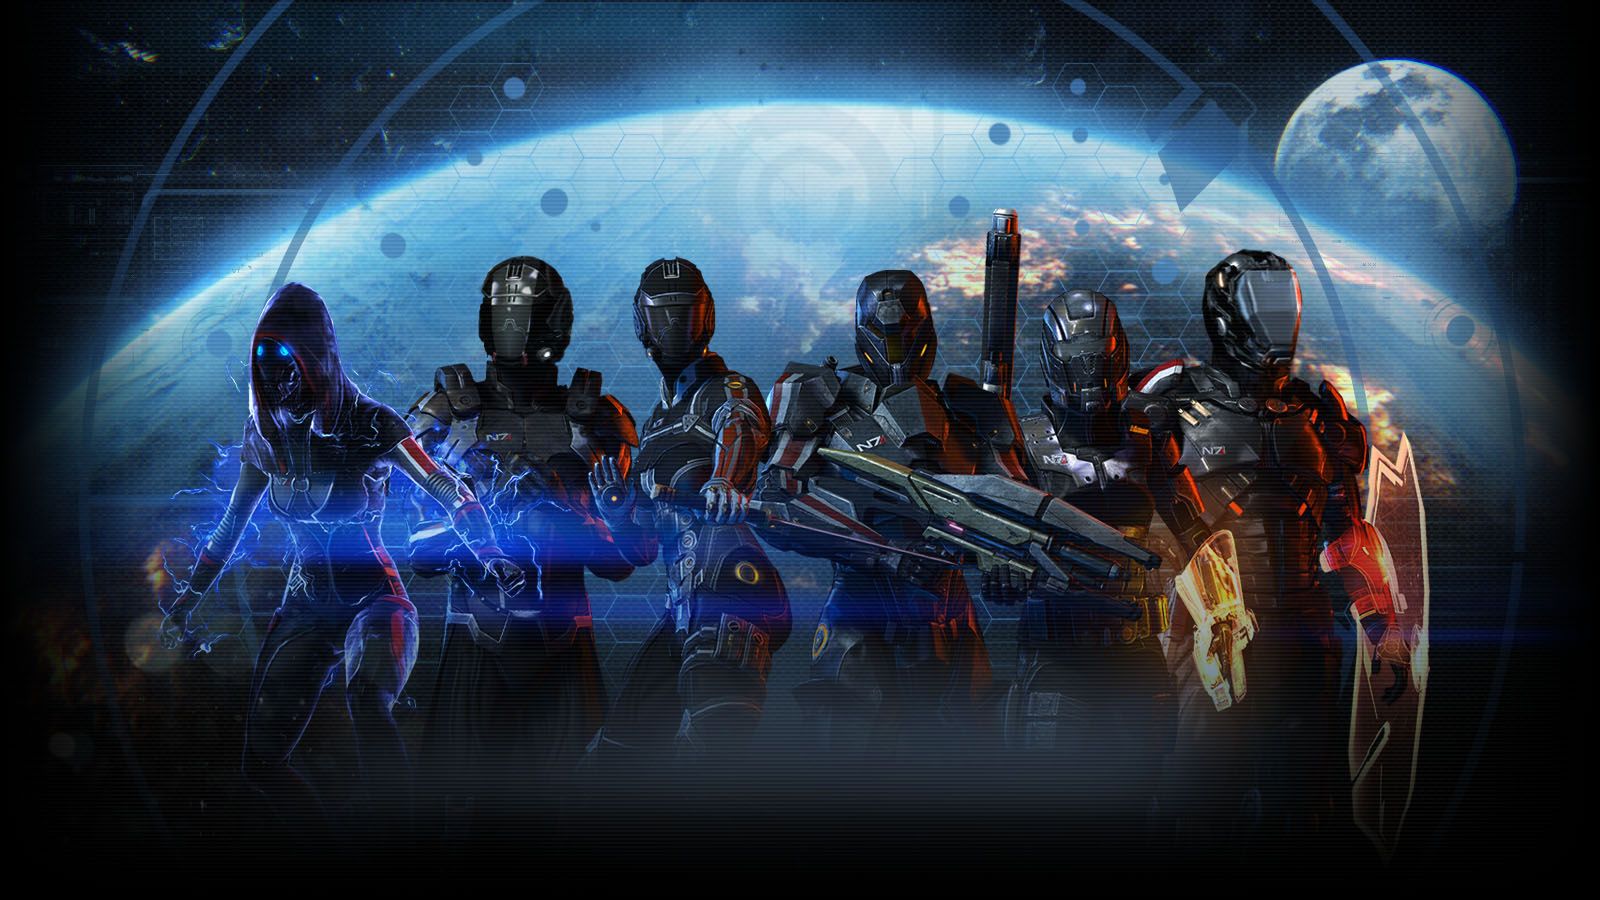 Mass Effect 3 Desktop Wallpapers - HD Wallpapers Backgrounds of